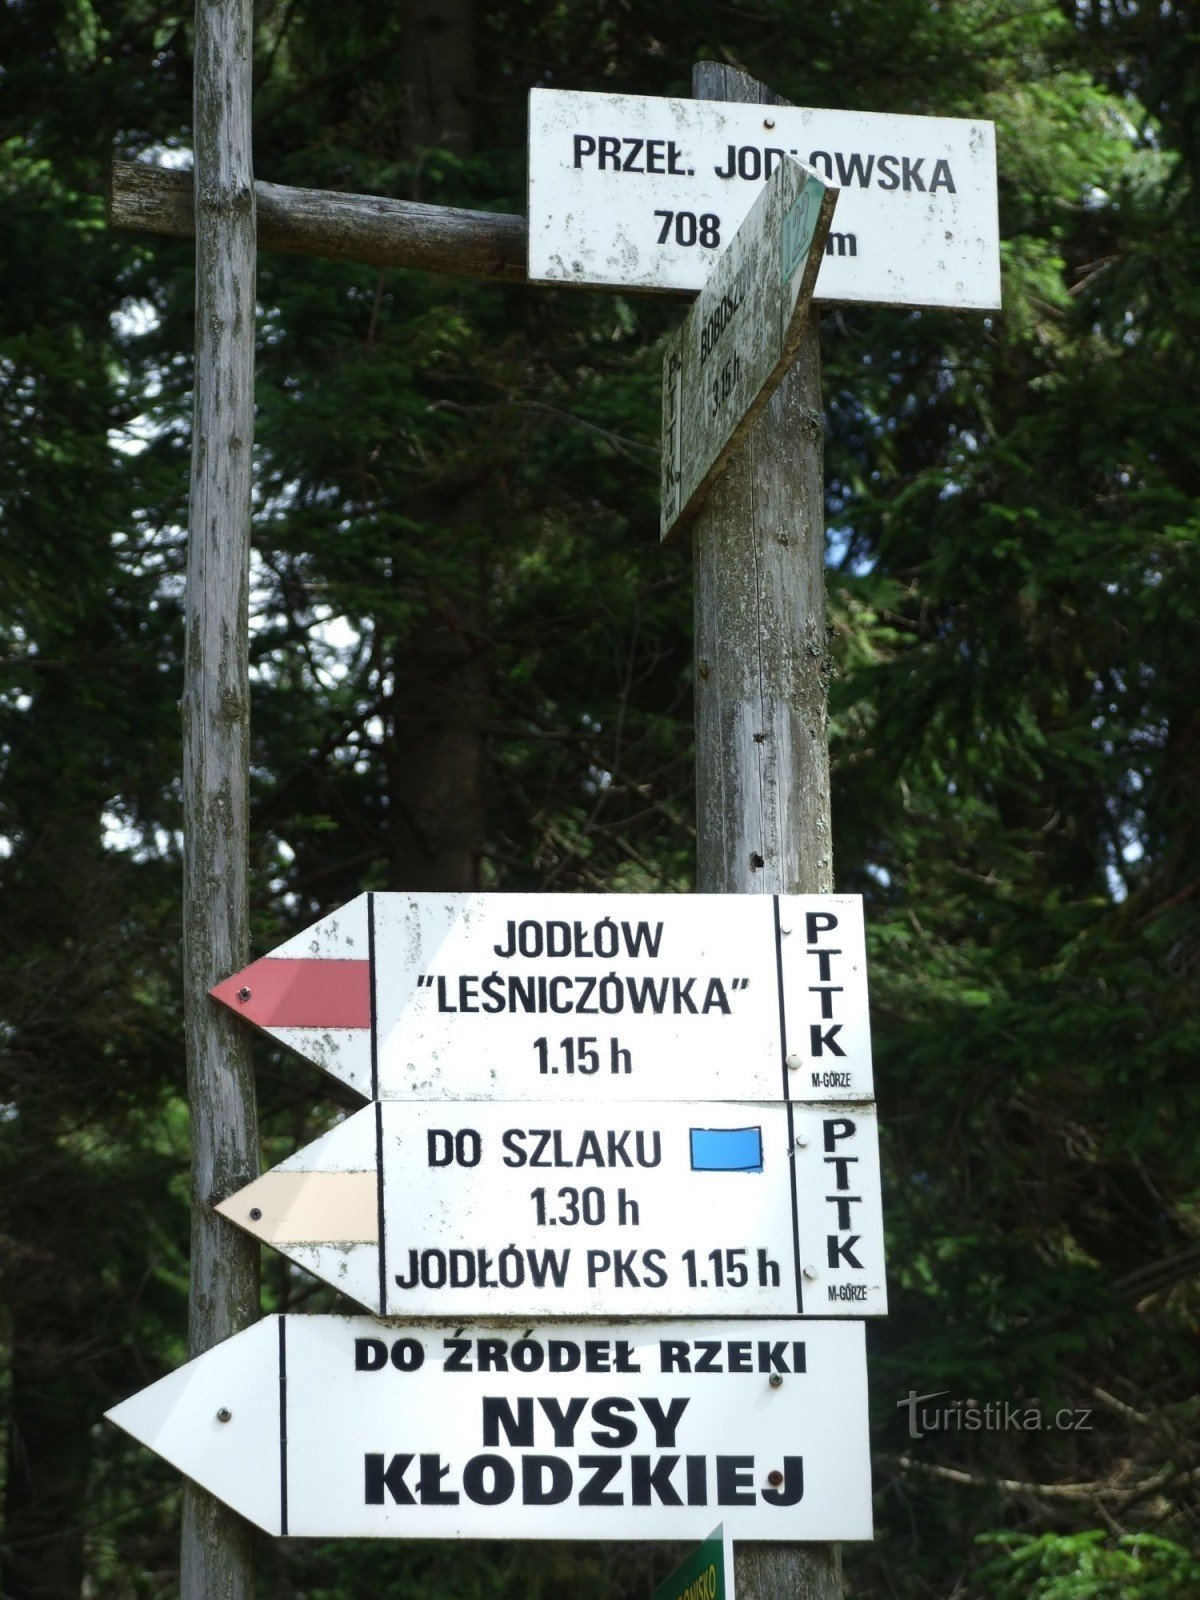 Przel. Jodlowska, Polish guide